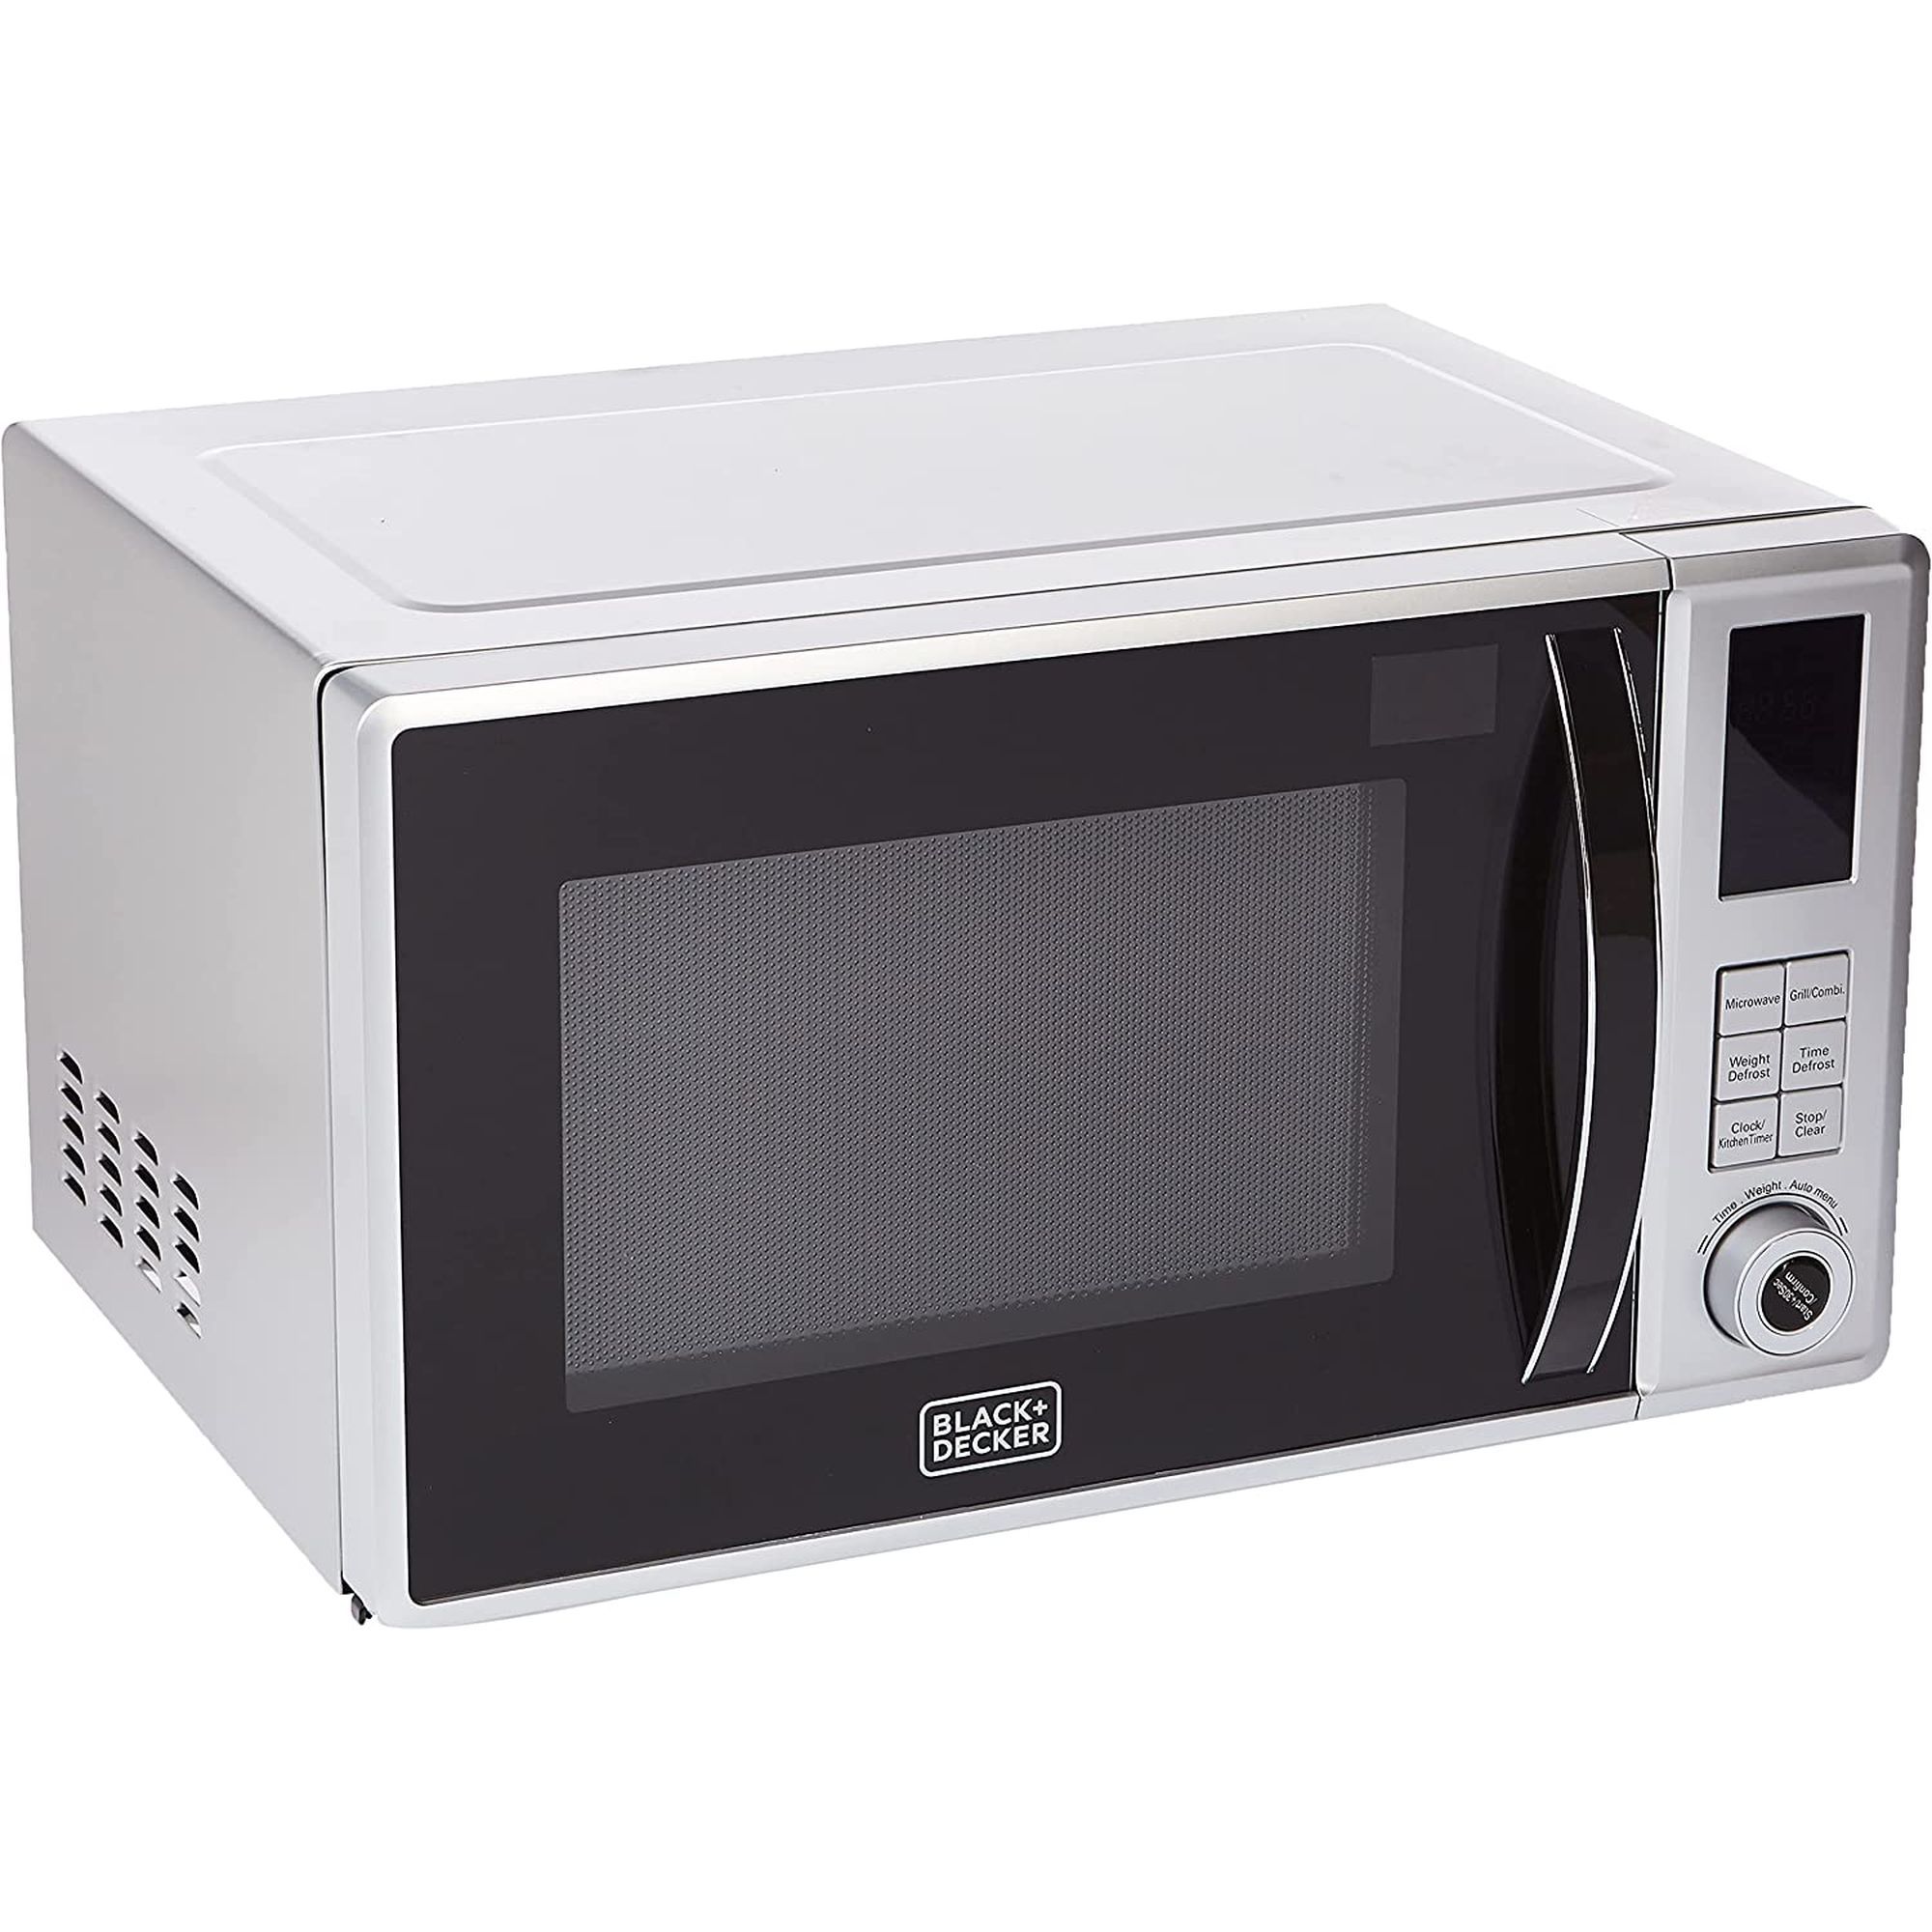 Black & Decker Digital Microwave With Grill, 800W, 23L, Silver